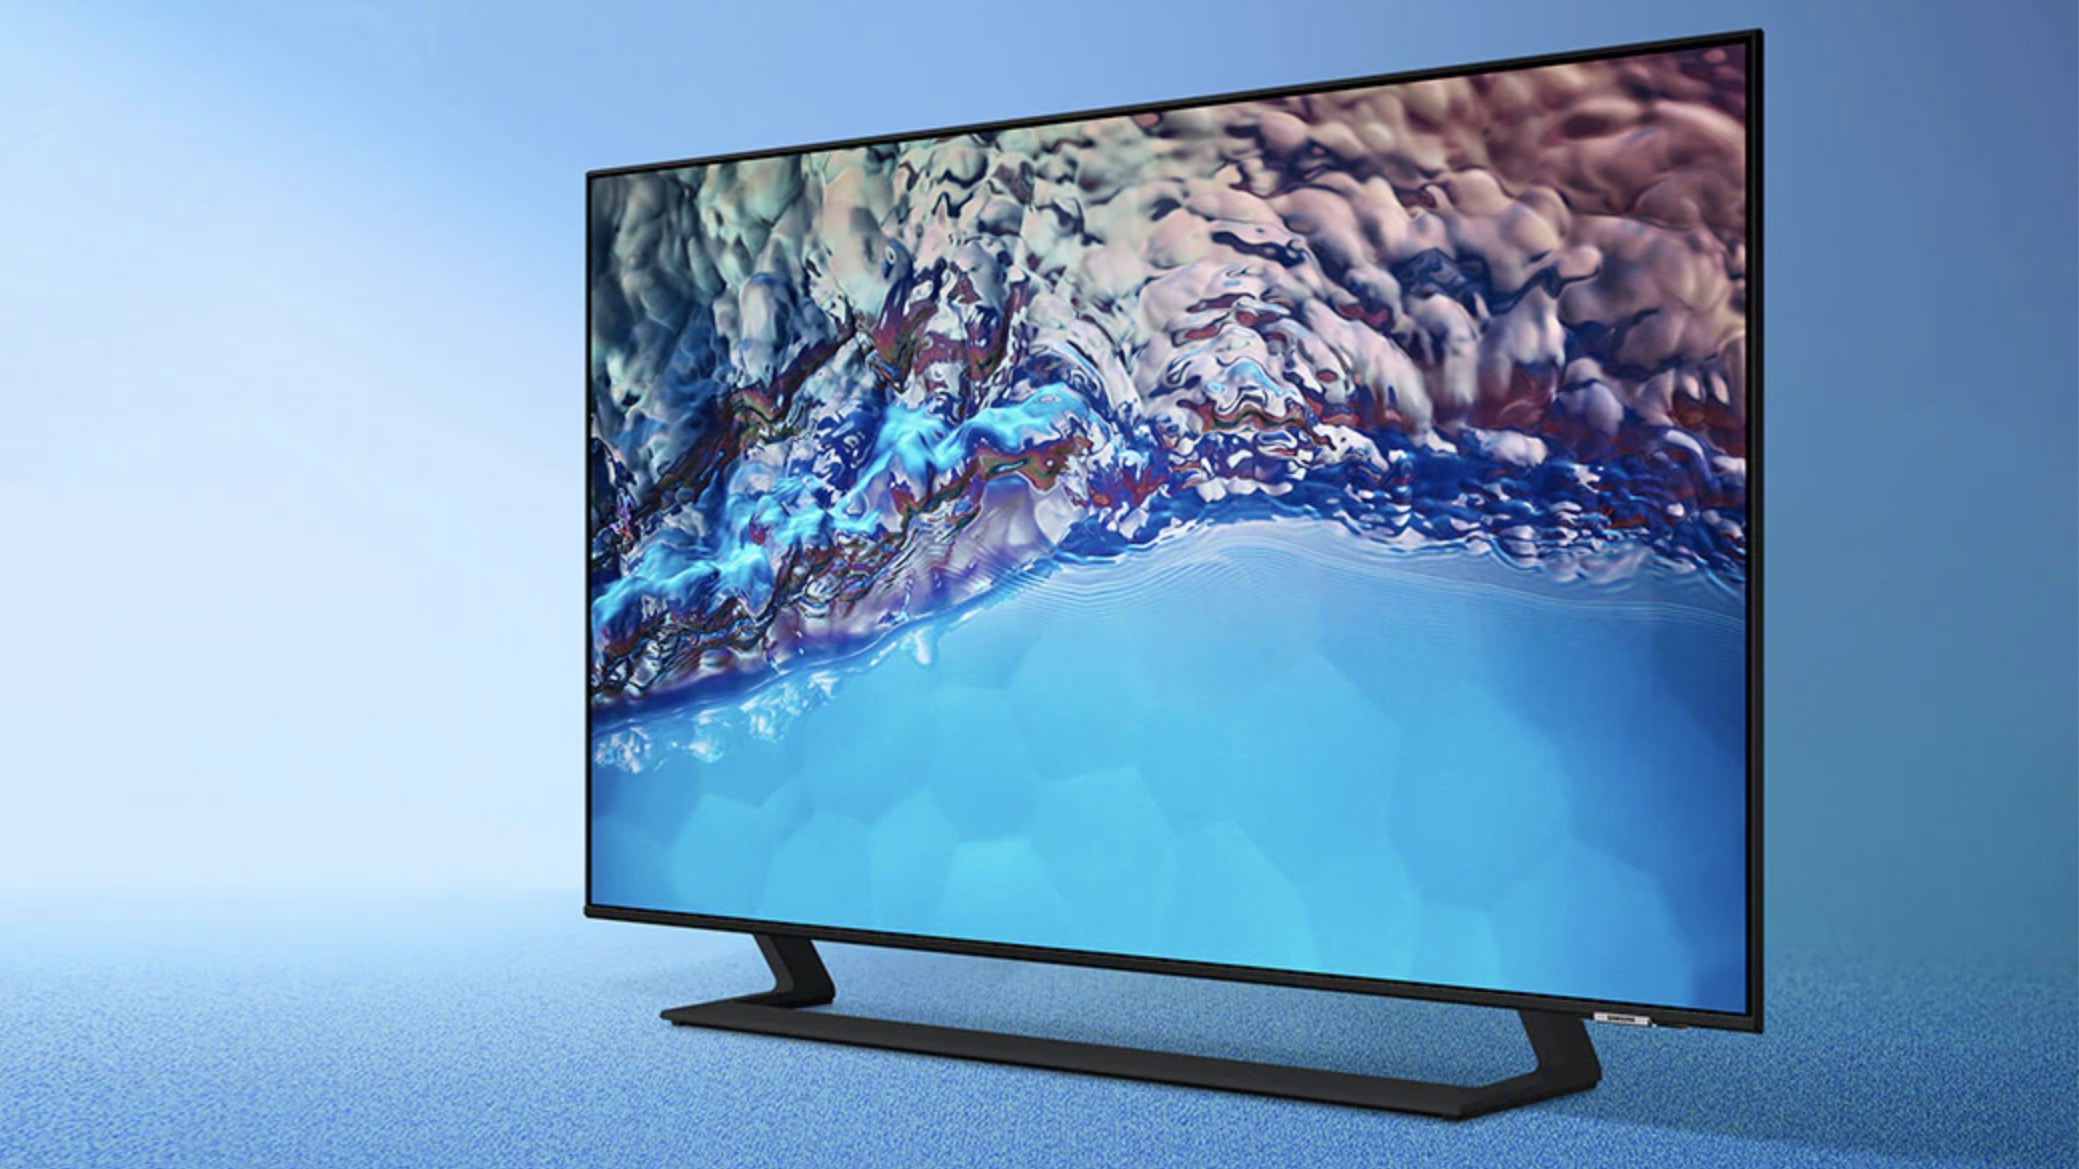 The Samsung BU8500 tv against a blue background